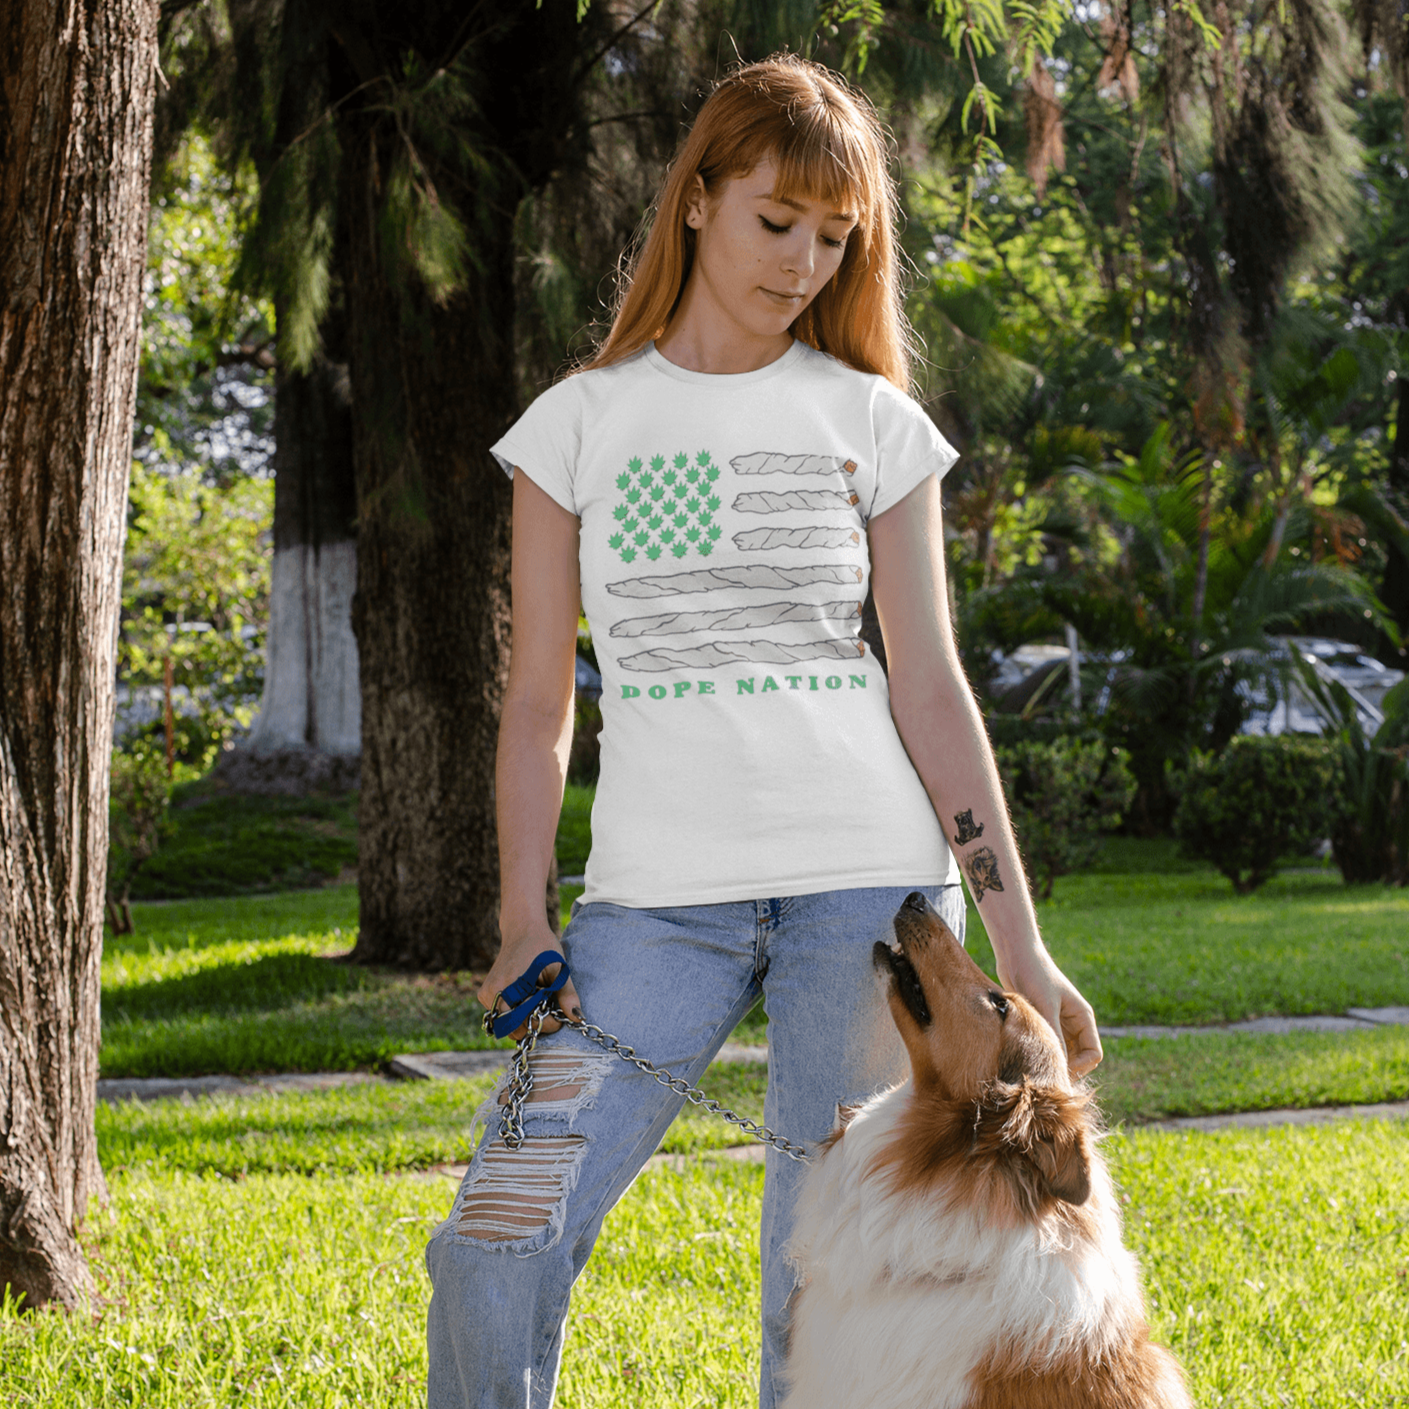 Dope Nation Green American Flag Soft Style Lightweight Unisex T-Shirt - TopKoalaTee